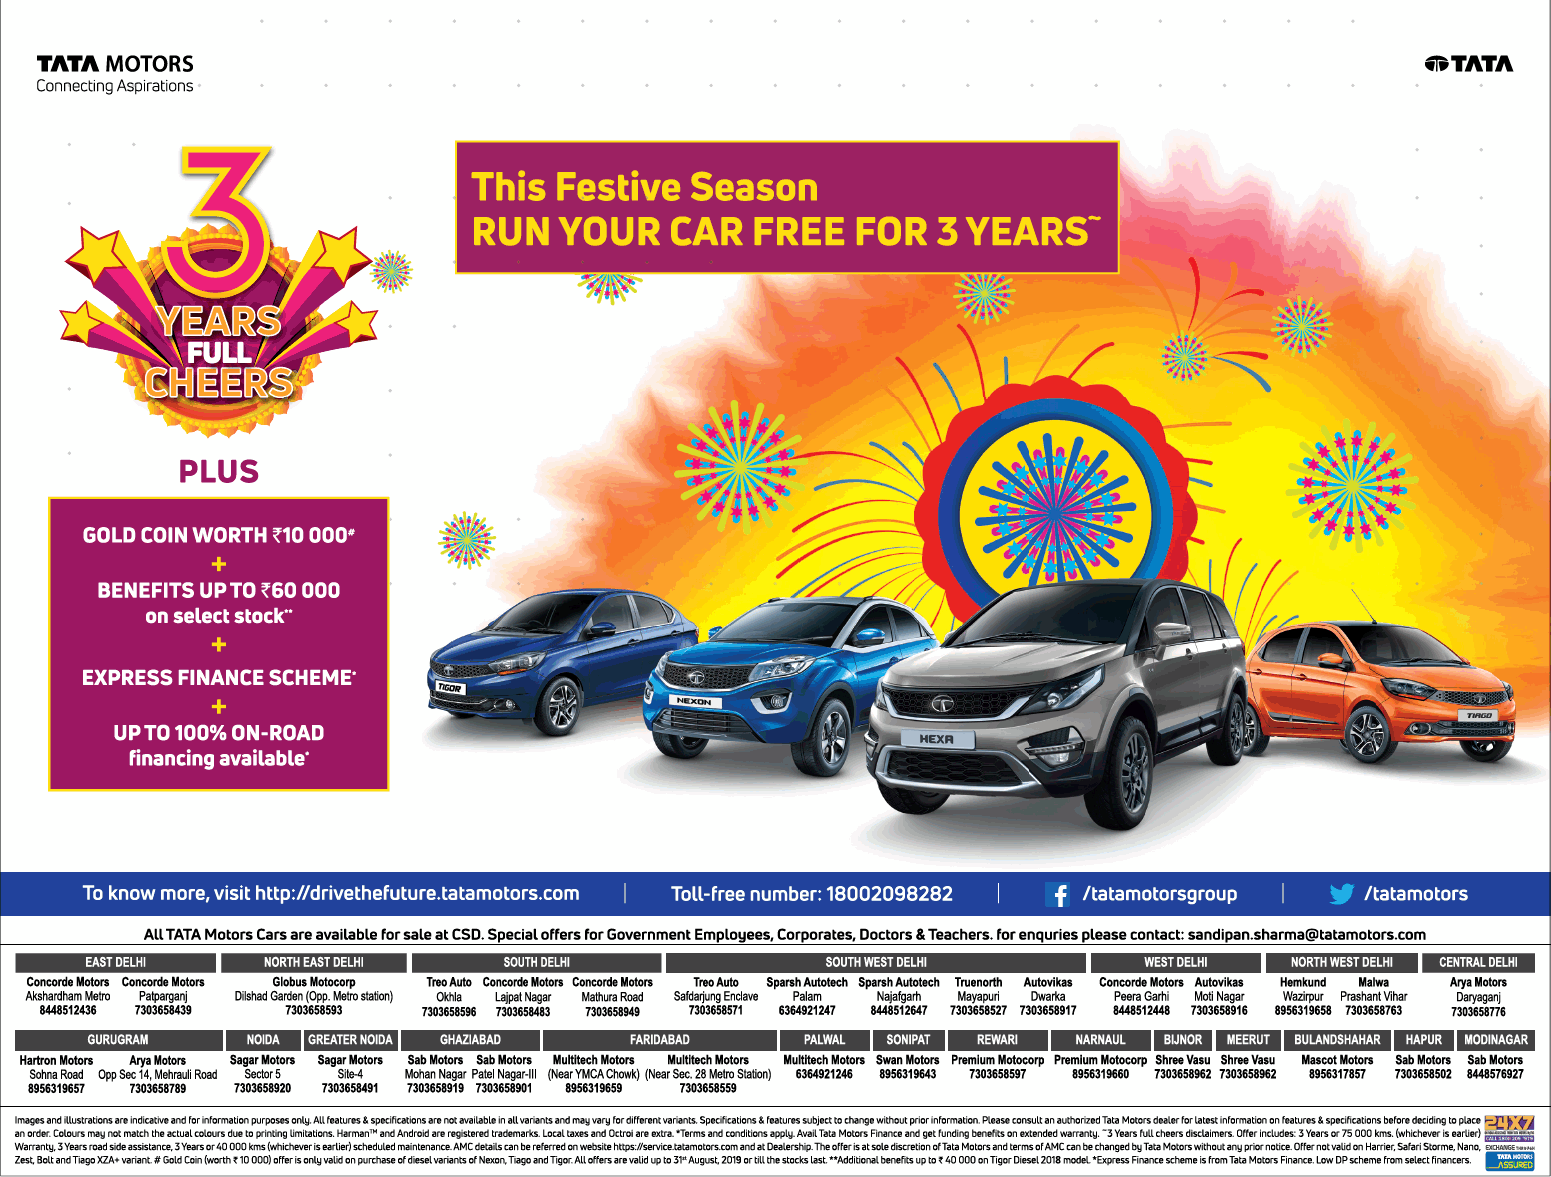 tata-motors-this-festive-season-3-years-full-cheers-ad-delhi-times-25-08-2019.png